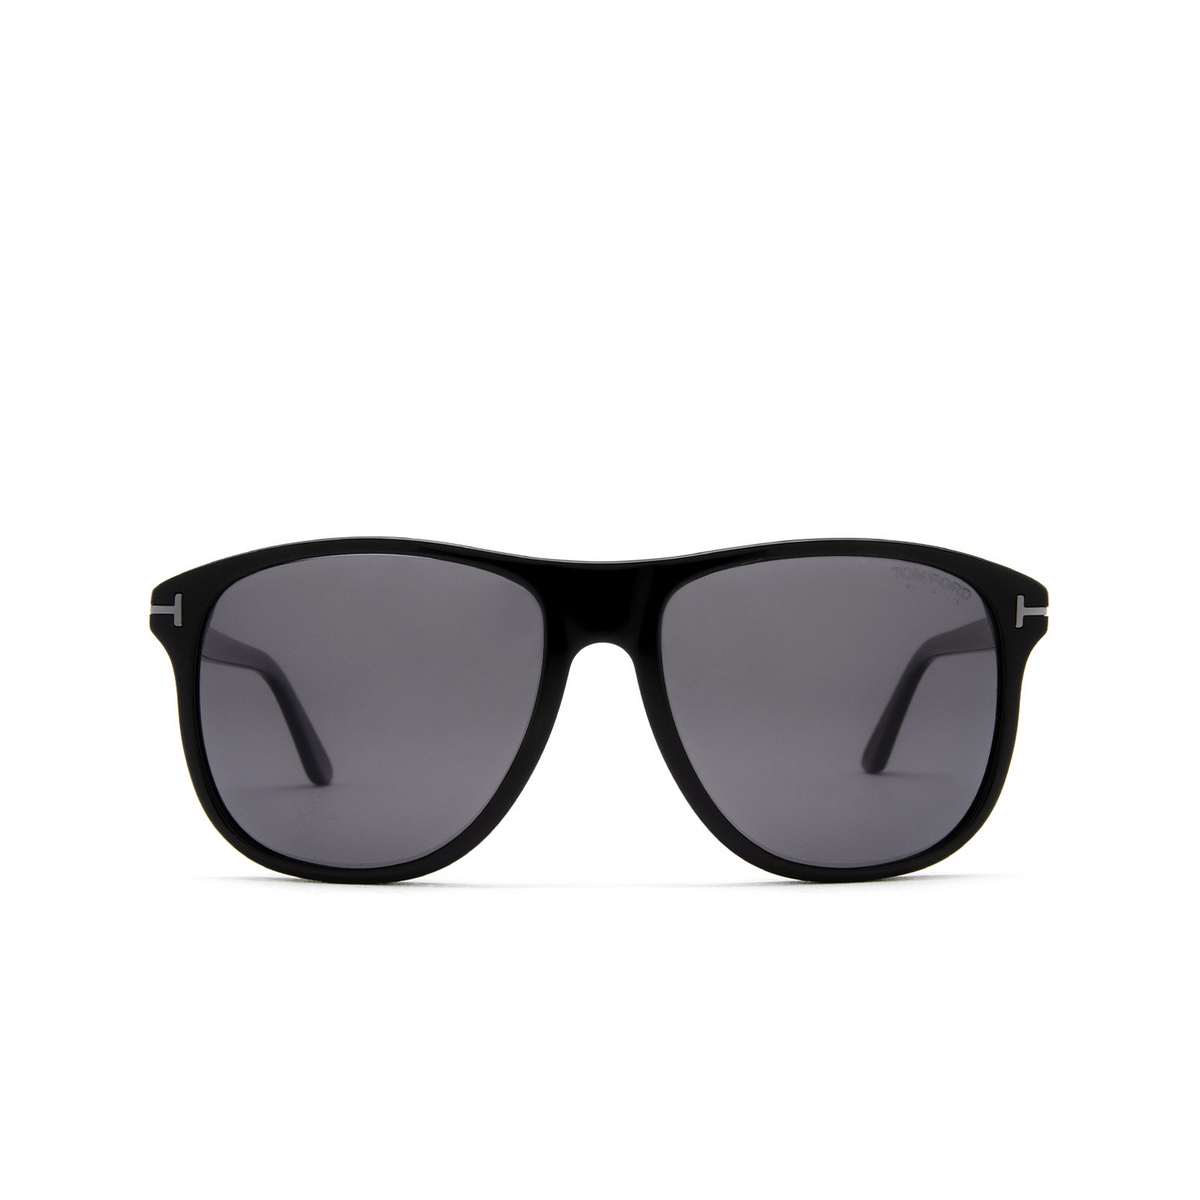 Tom Ford JONI Sunglasses 01D Black - front view